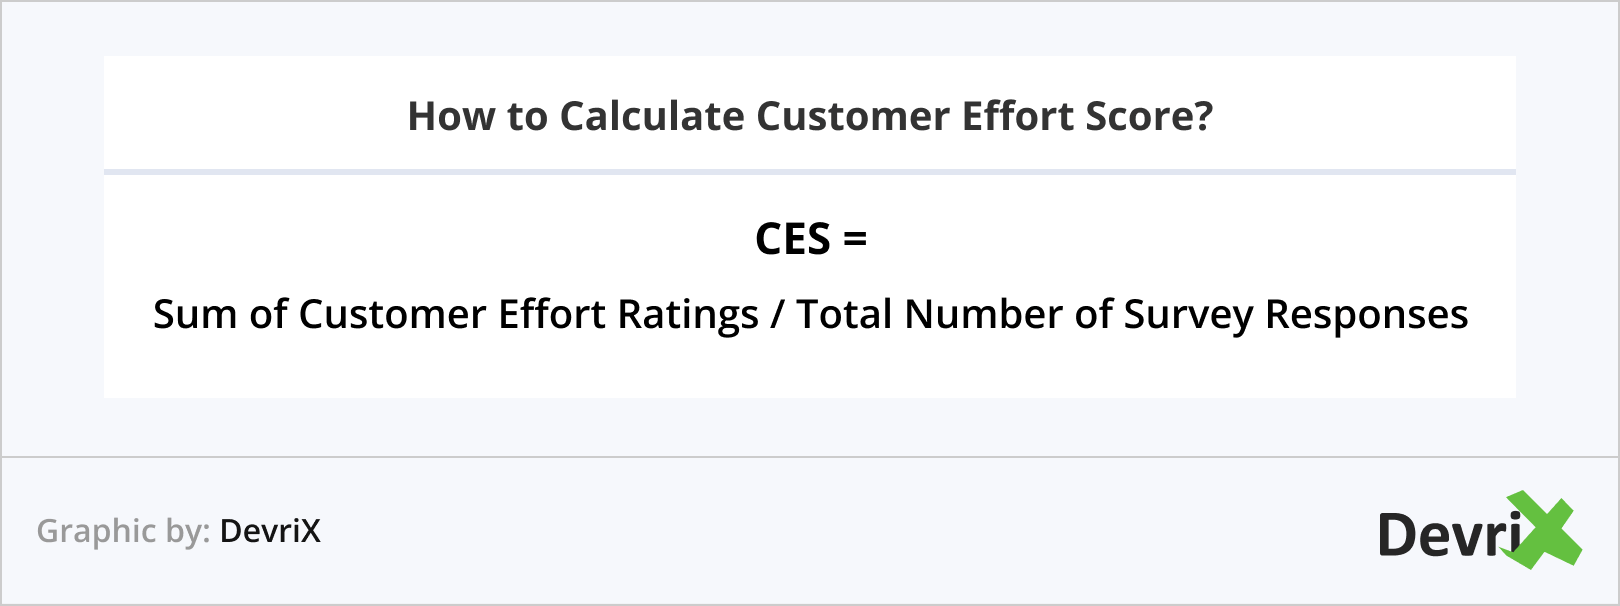 How to Calculate Customer Effort Score